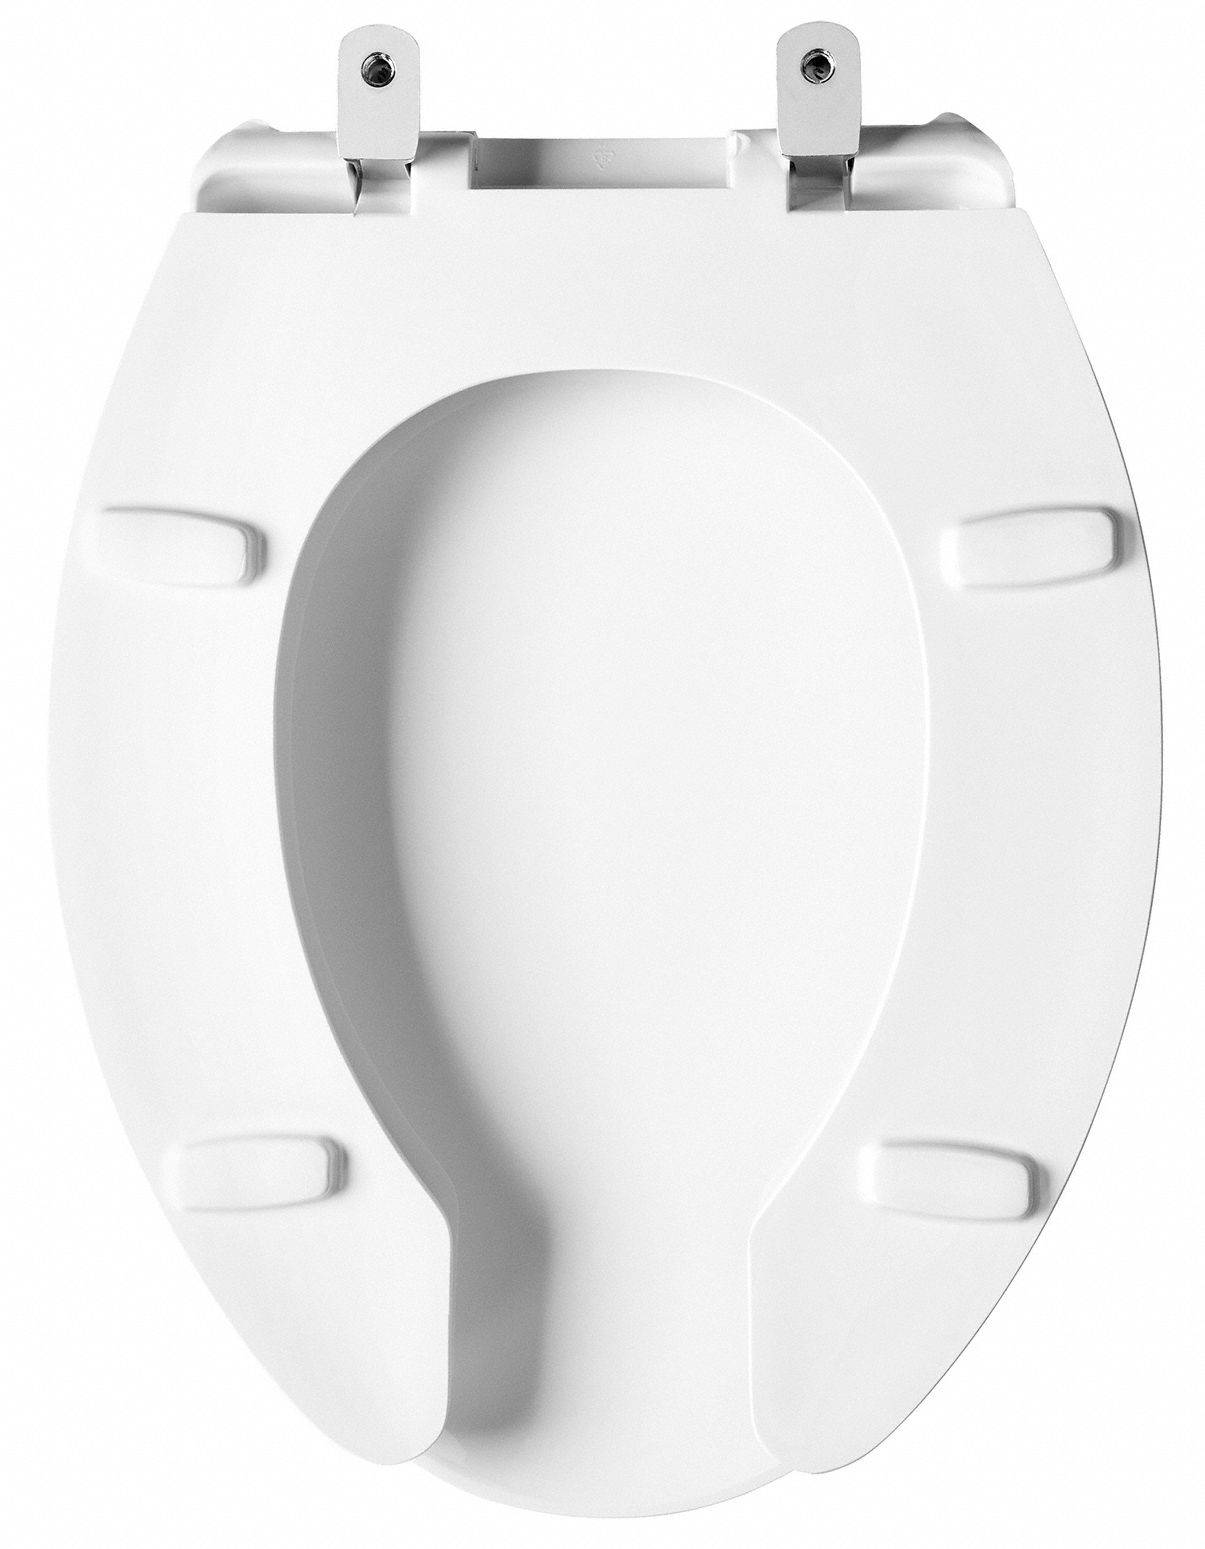 BEMIS Elongated, Standard Toilet Seat Type, Open Front Type, Includes